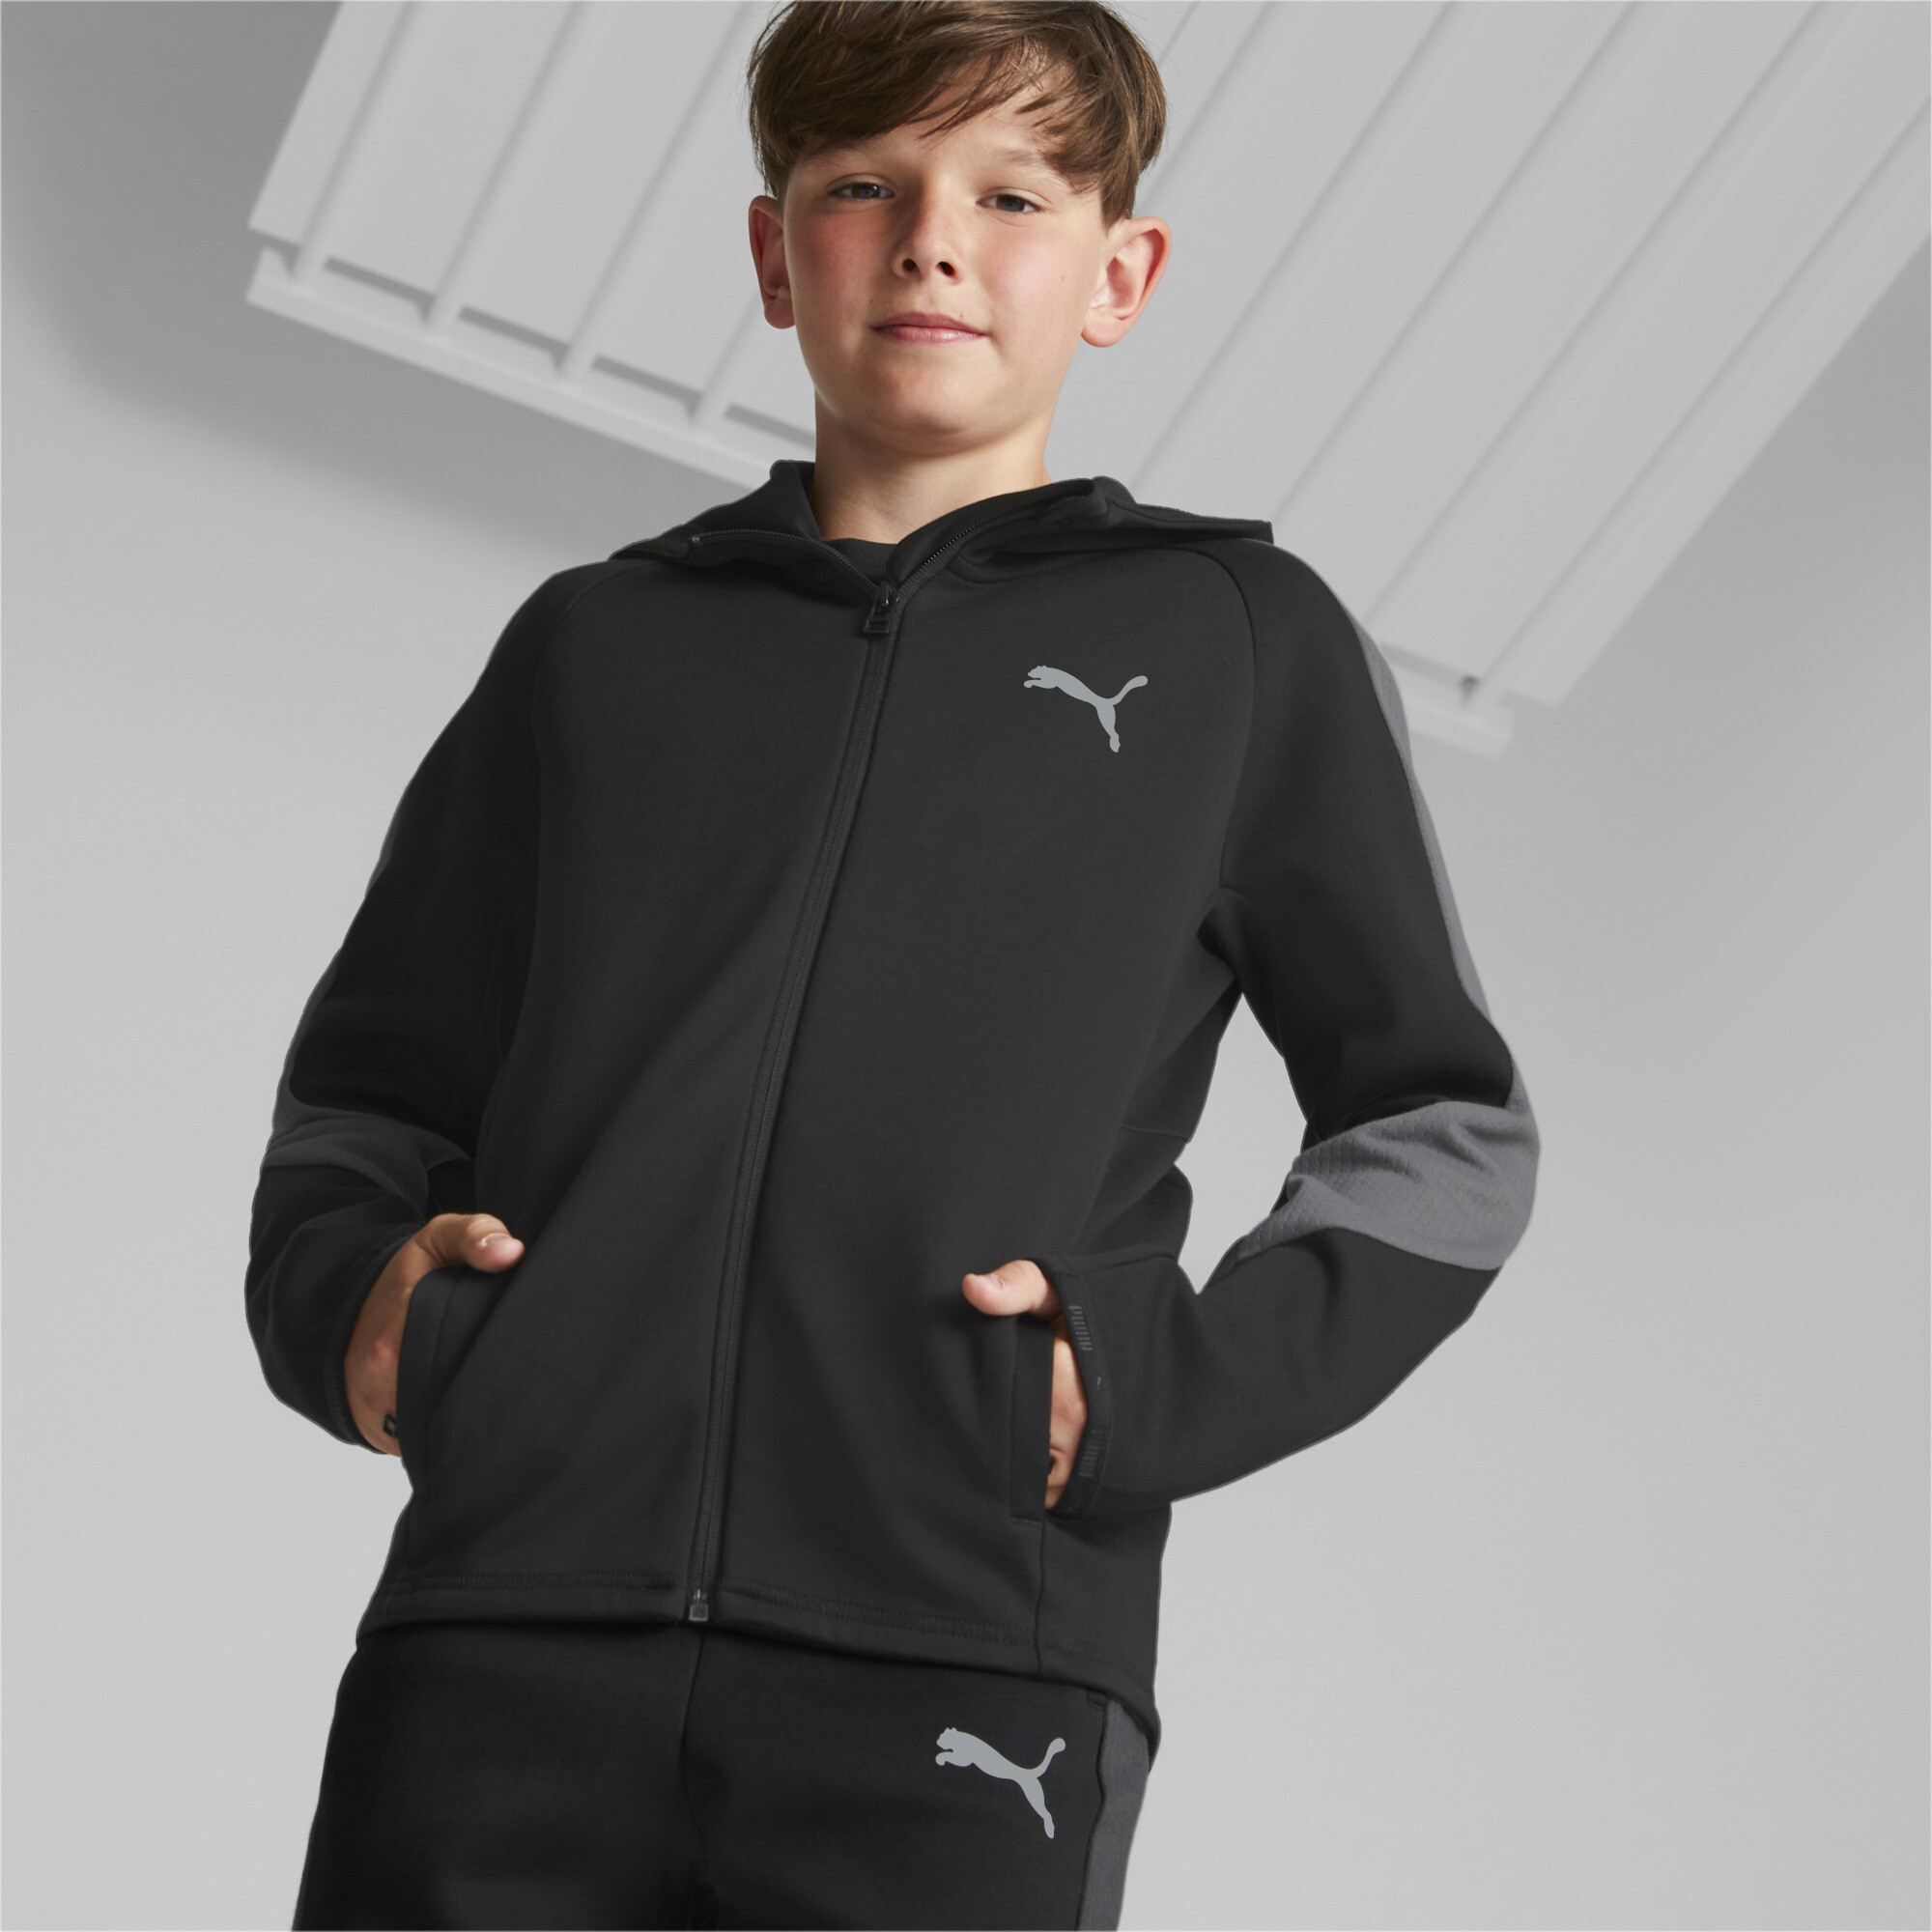 PUMA EVOSTRIPE Full-Zip Jacket Youth Full Zip Closure Kids Boys | eBay